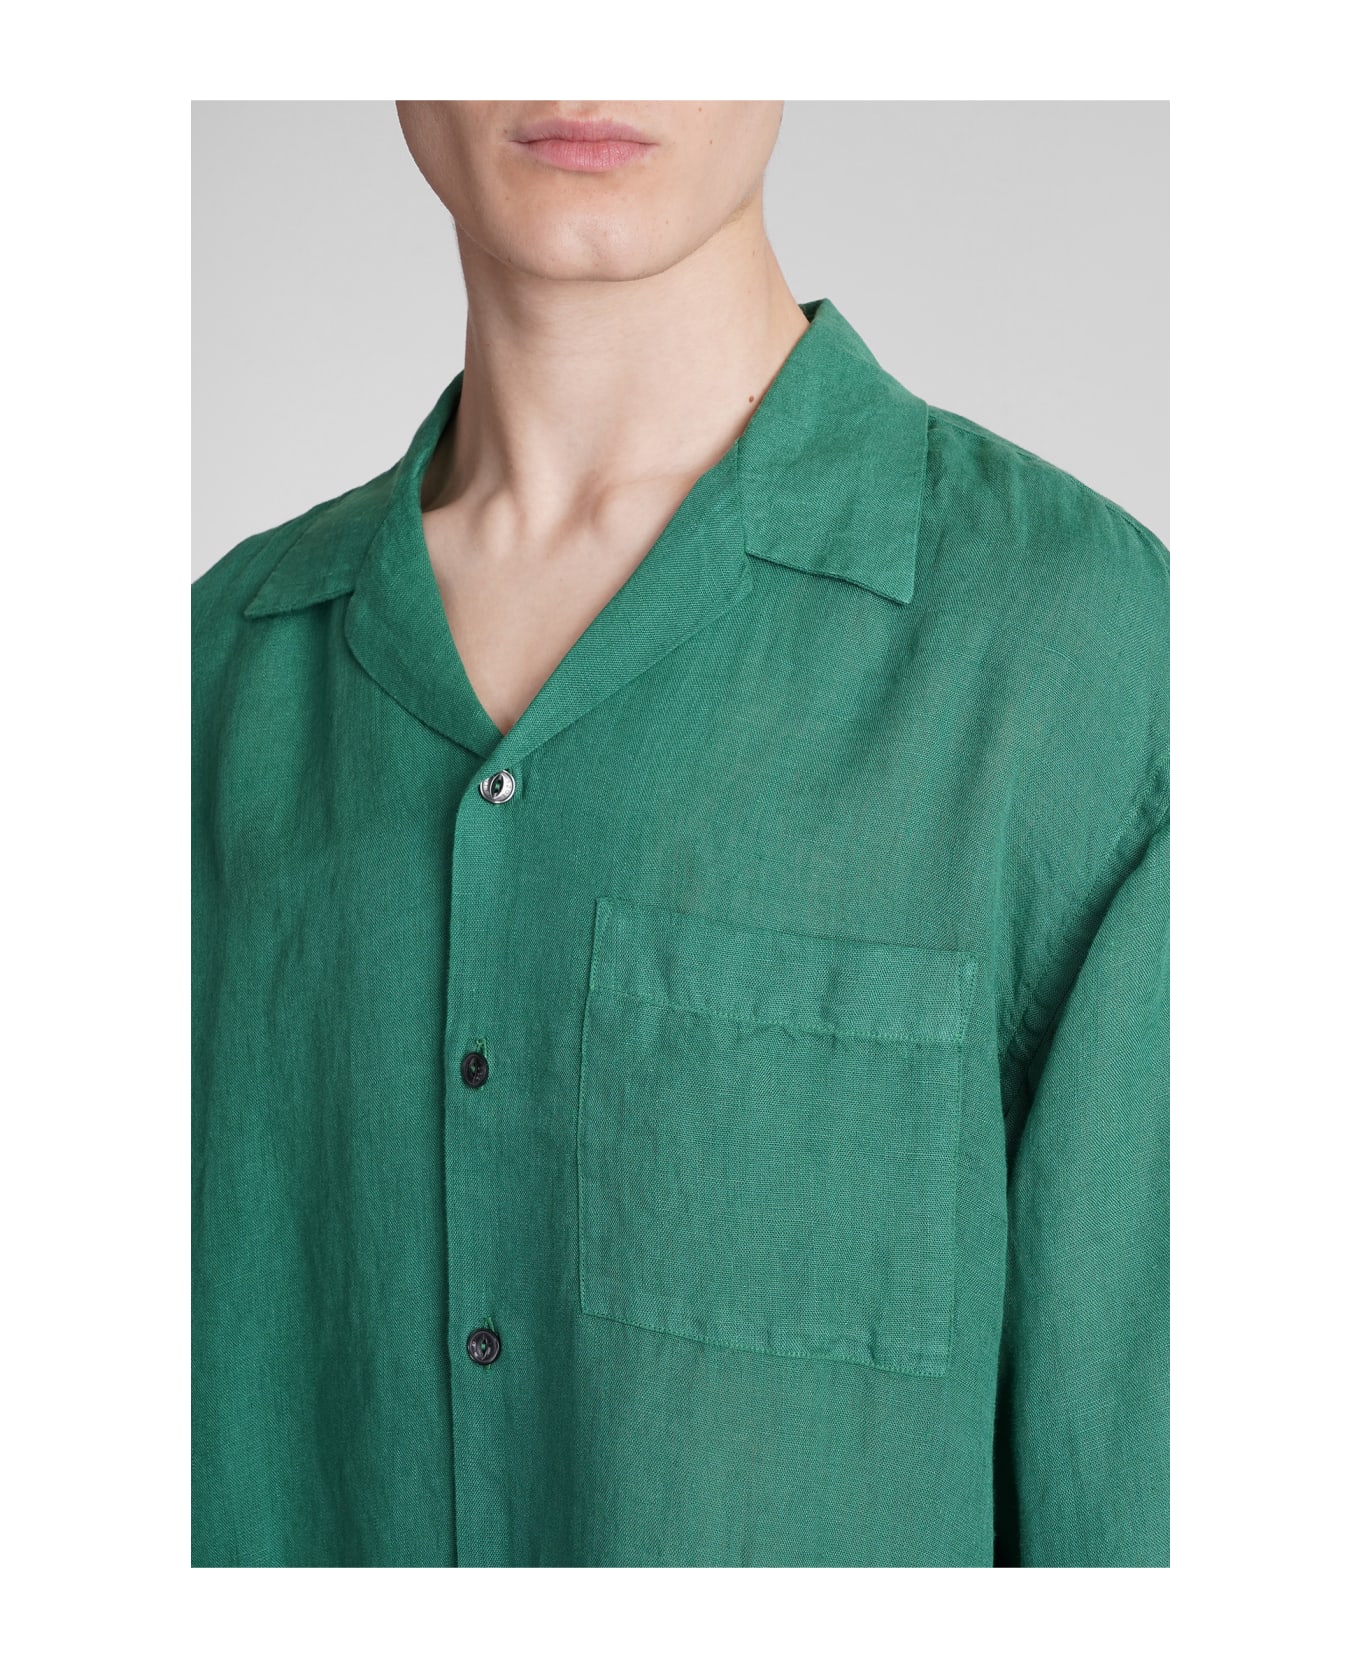 120% Lino Shirt In Green Linen - green